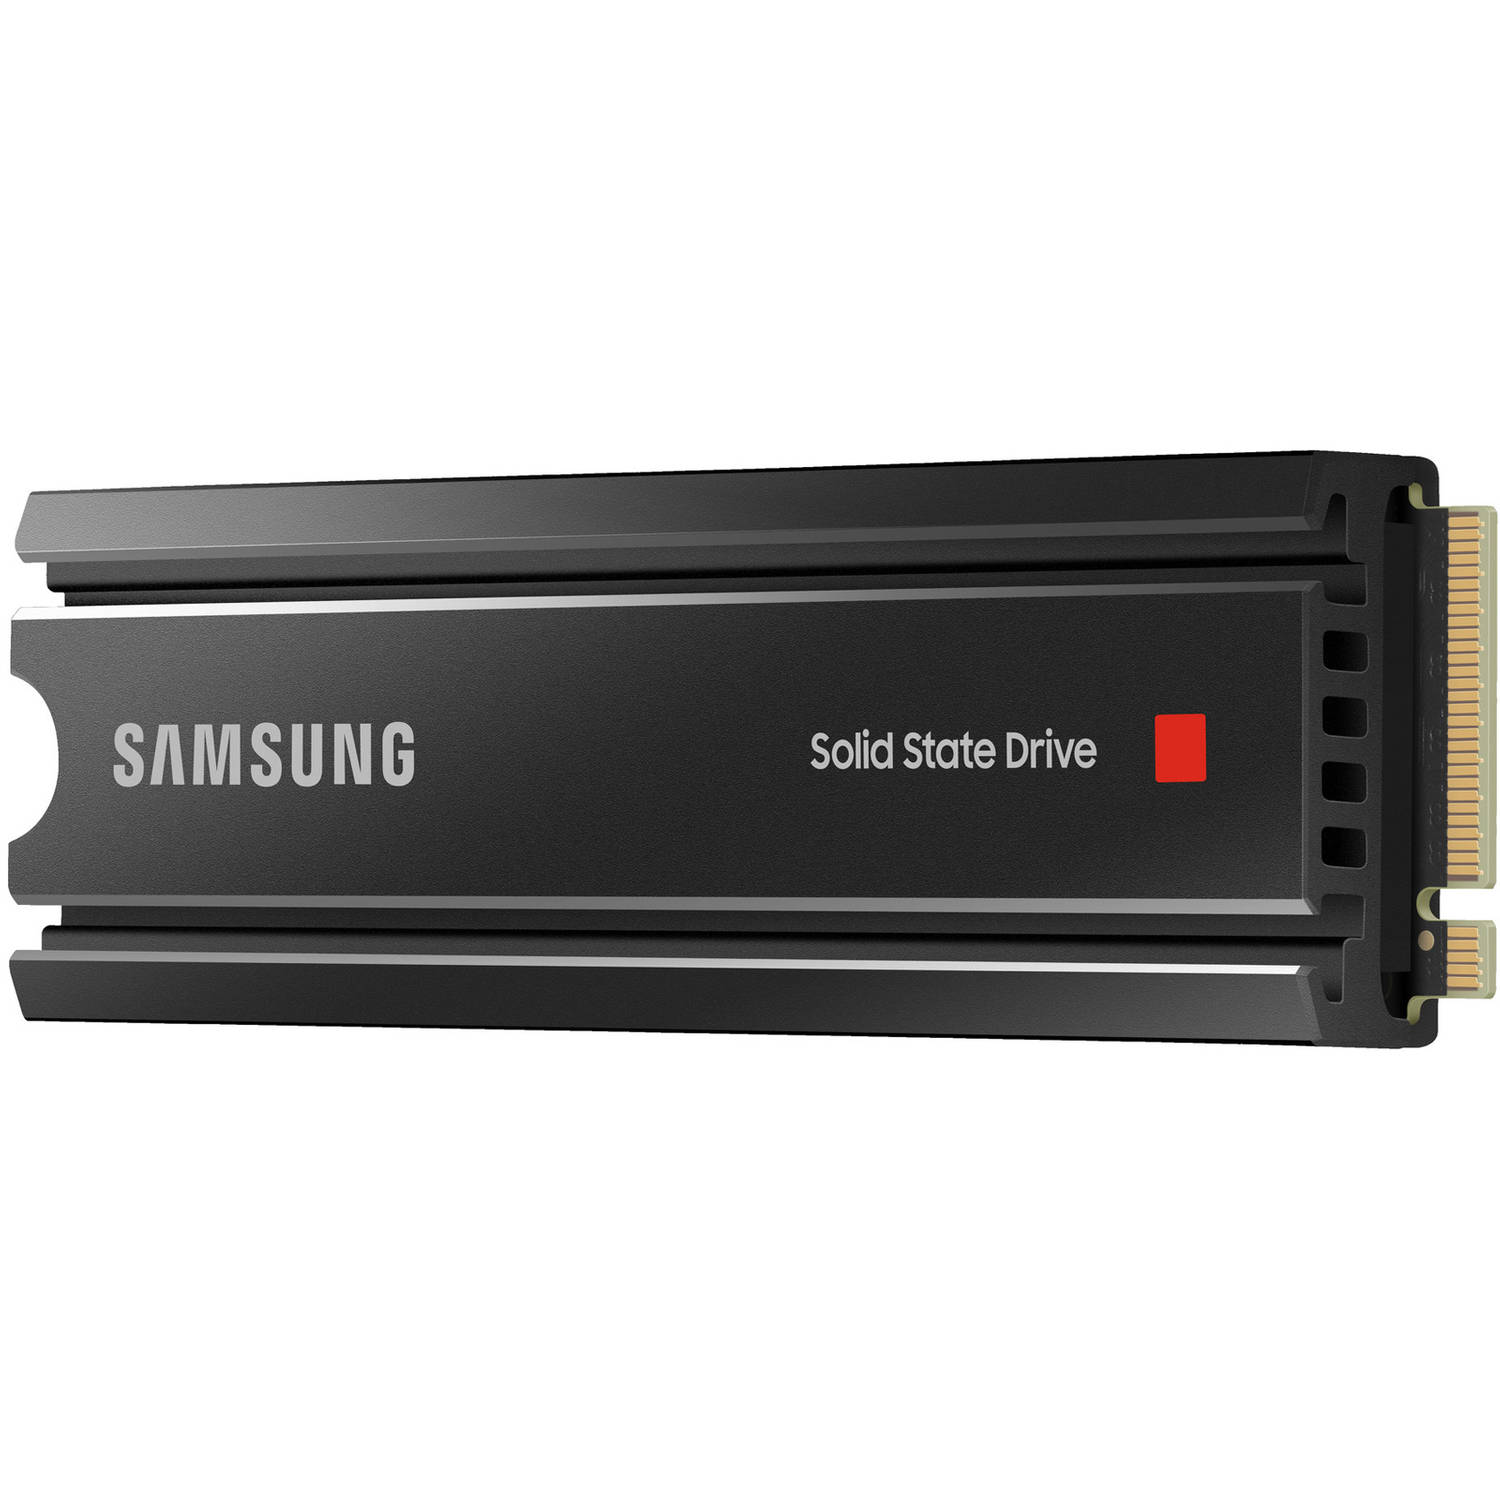 Winkelcentrum Omleiding Speeltoestellen Samsung interne harde schijf SSD 980 Pro met Heatsink (2TB) | Blokker